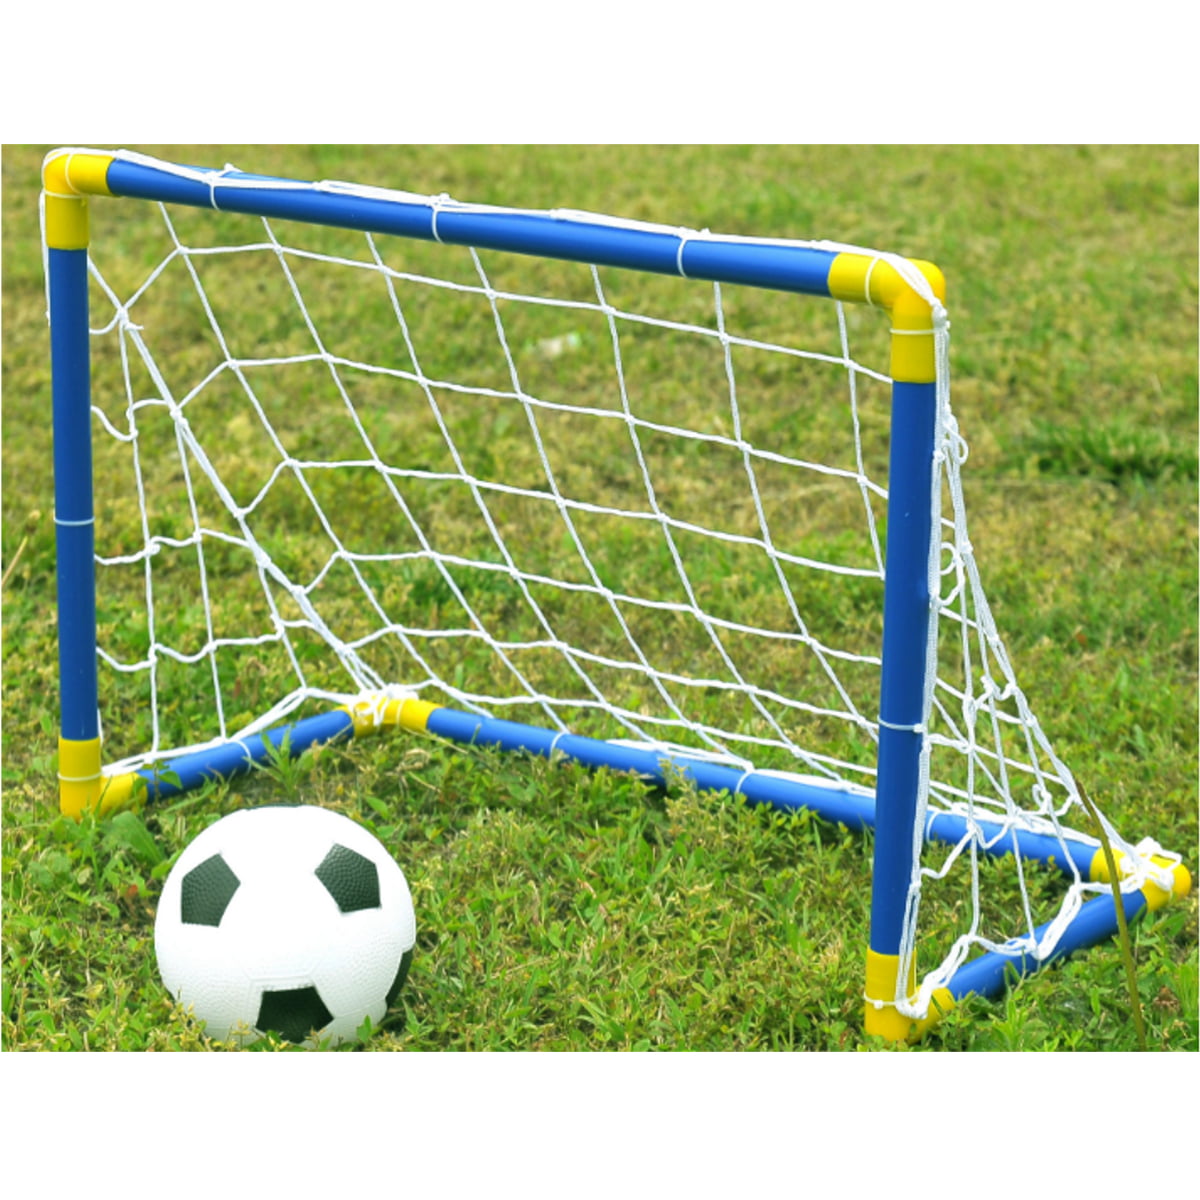 Indoor Mini FoldingFootball Soccer Ball Goal Post Net R5N6 Toy C1X0 